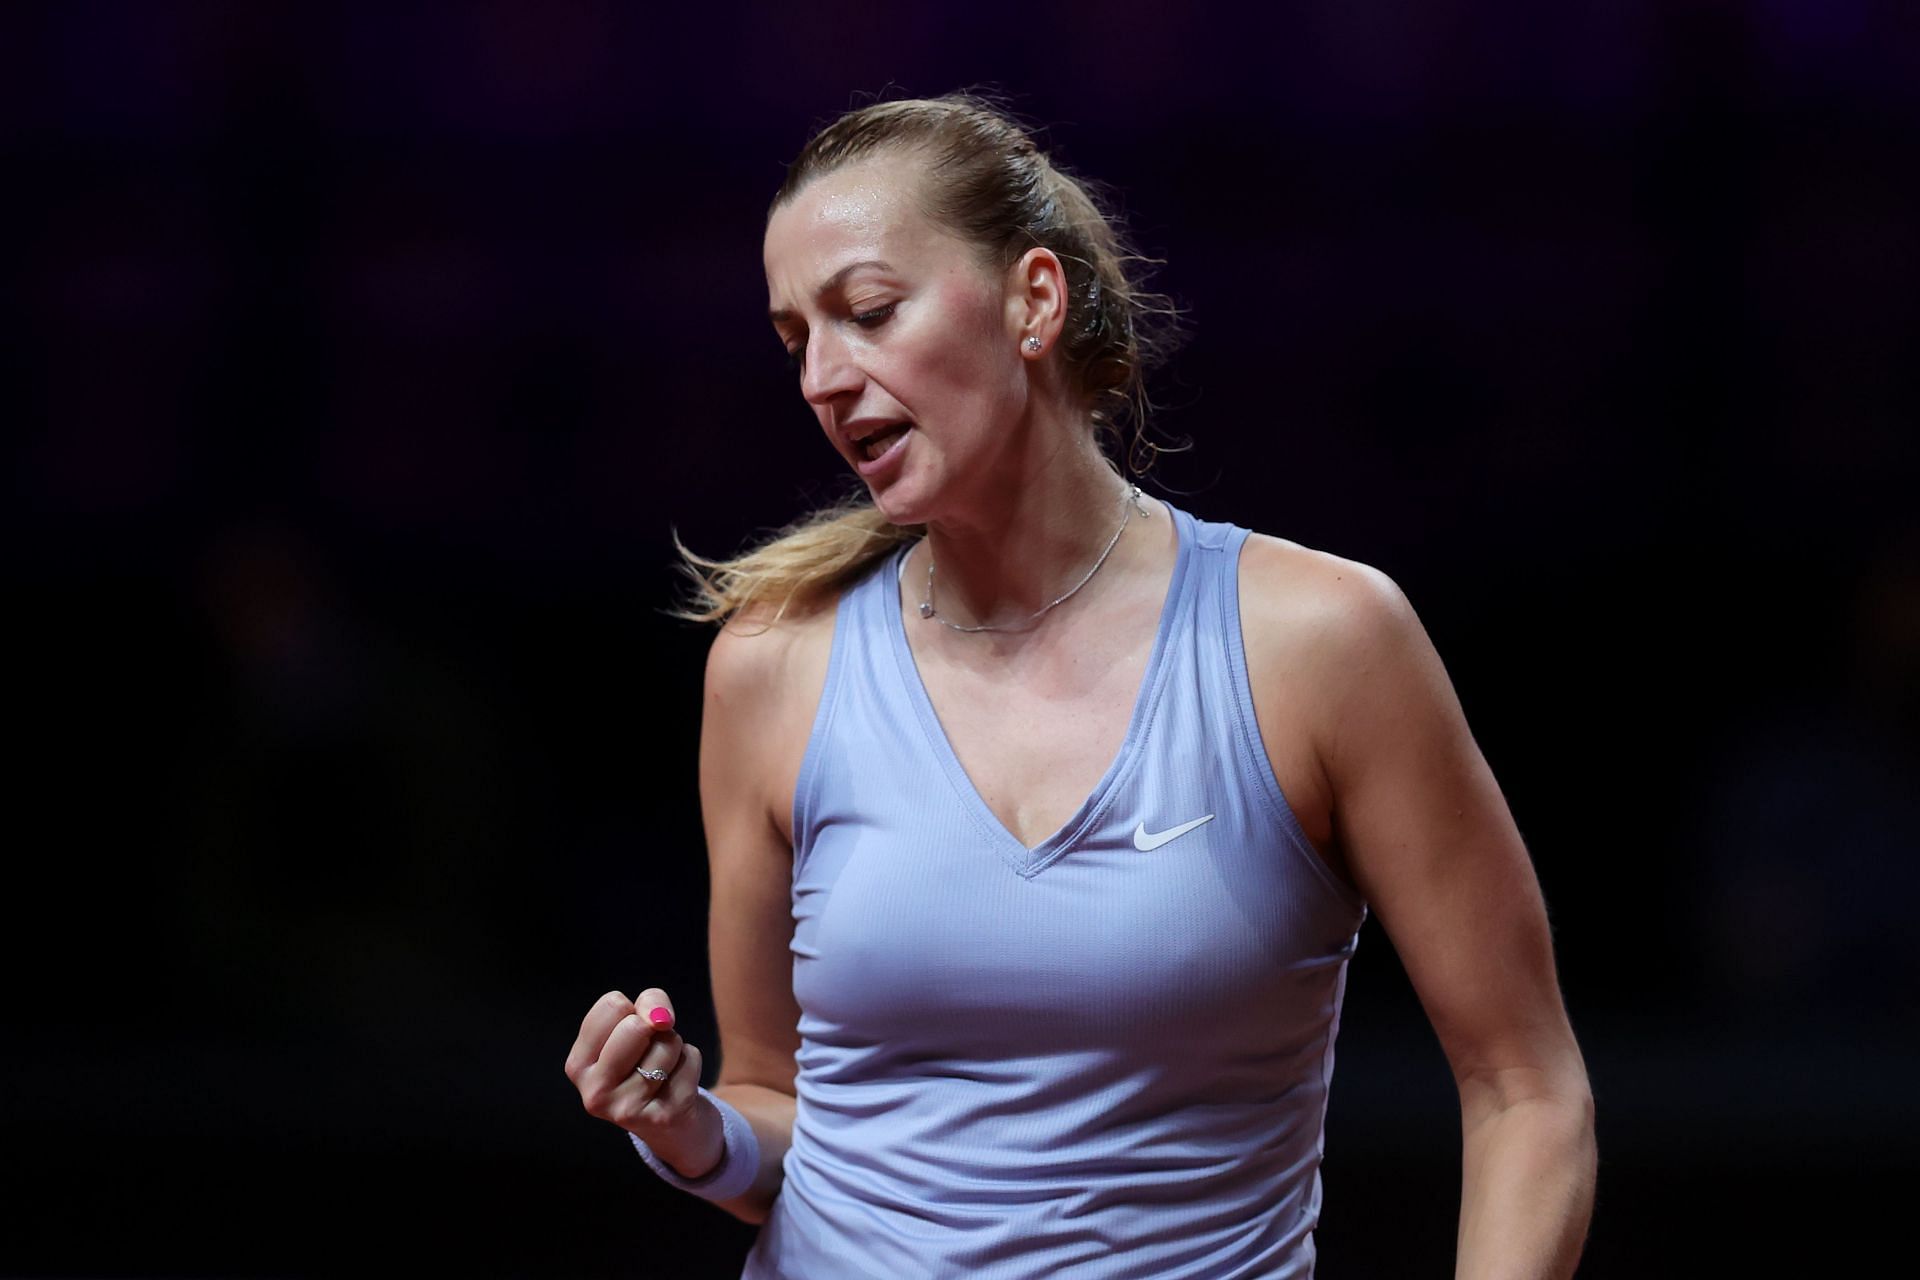 Kvitova has a solid past record in Stuttgart